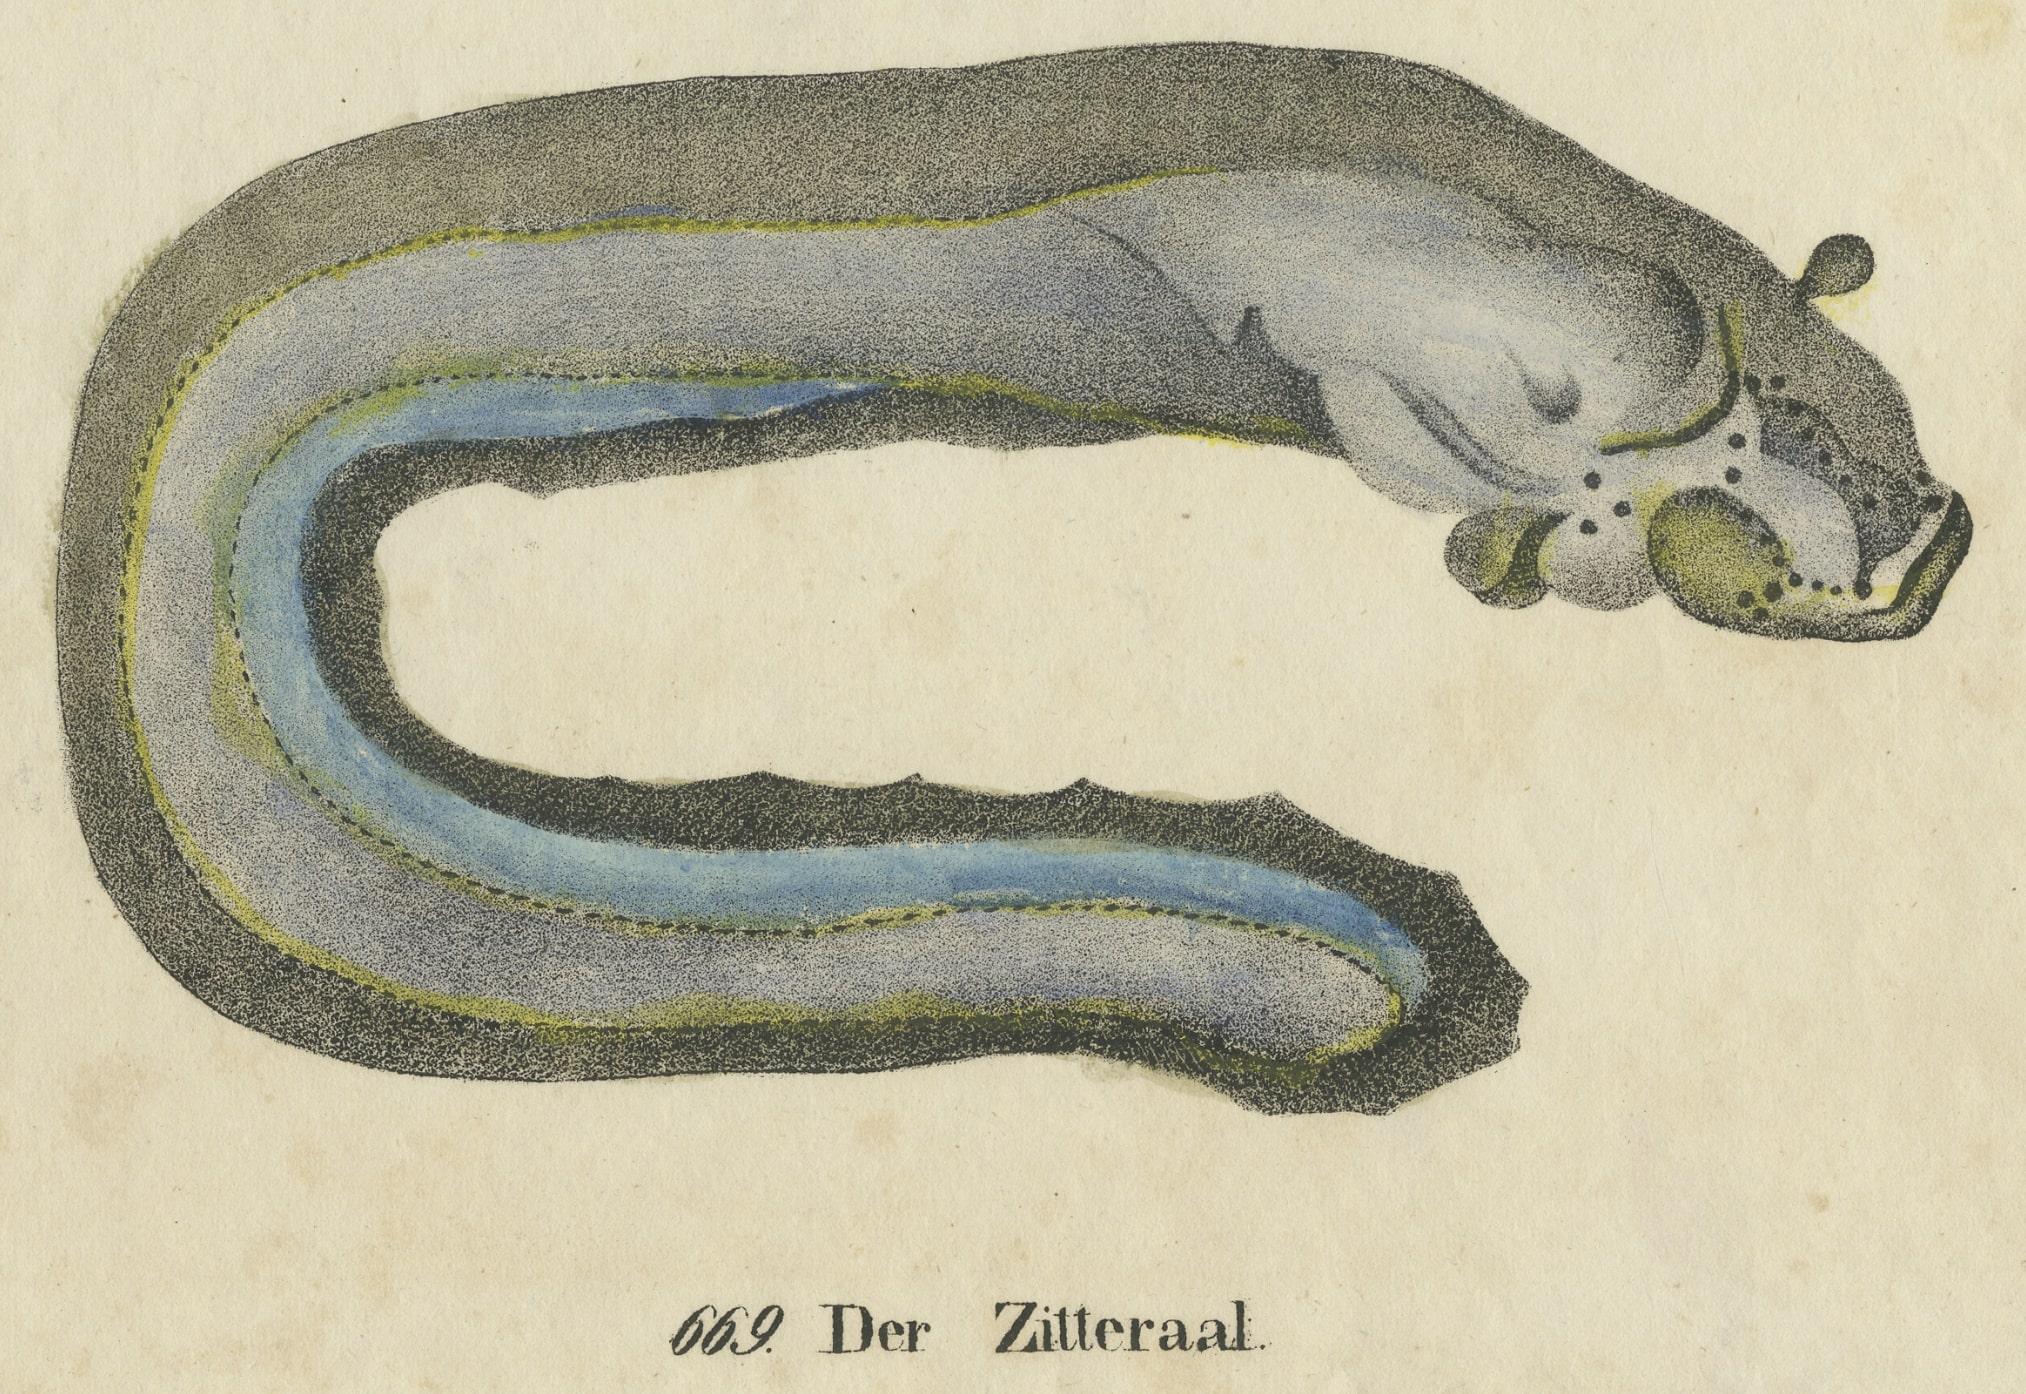 Antique print titled 'Der Zitteraal'. Original antique print of an electric eel. This print originates from 